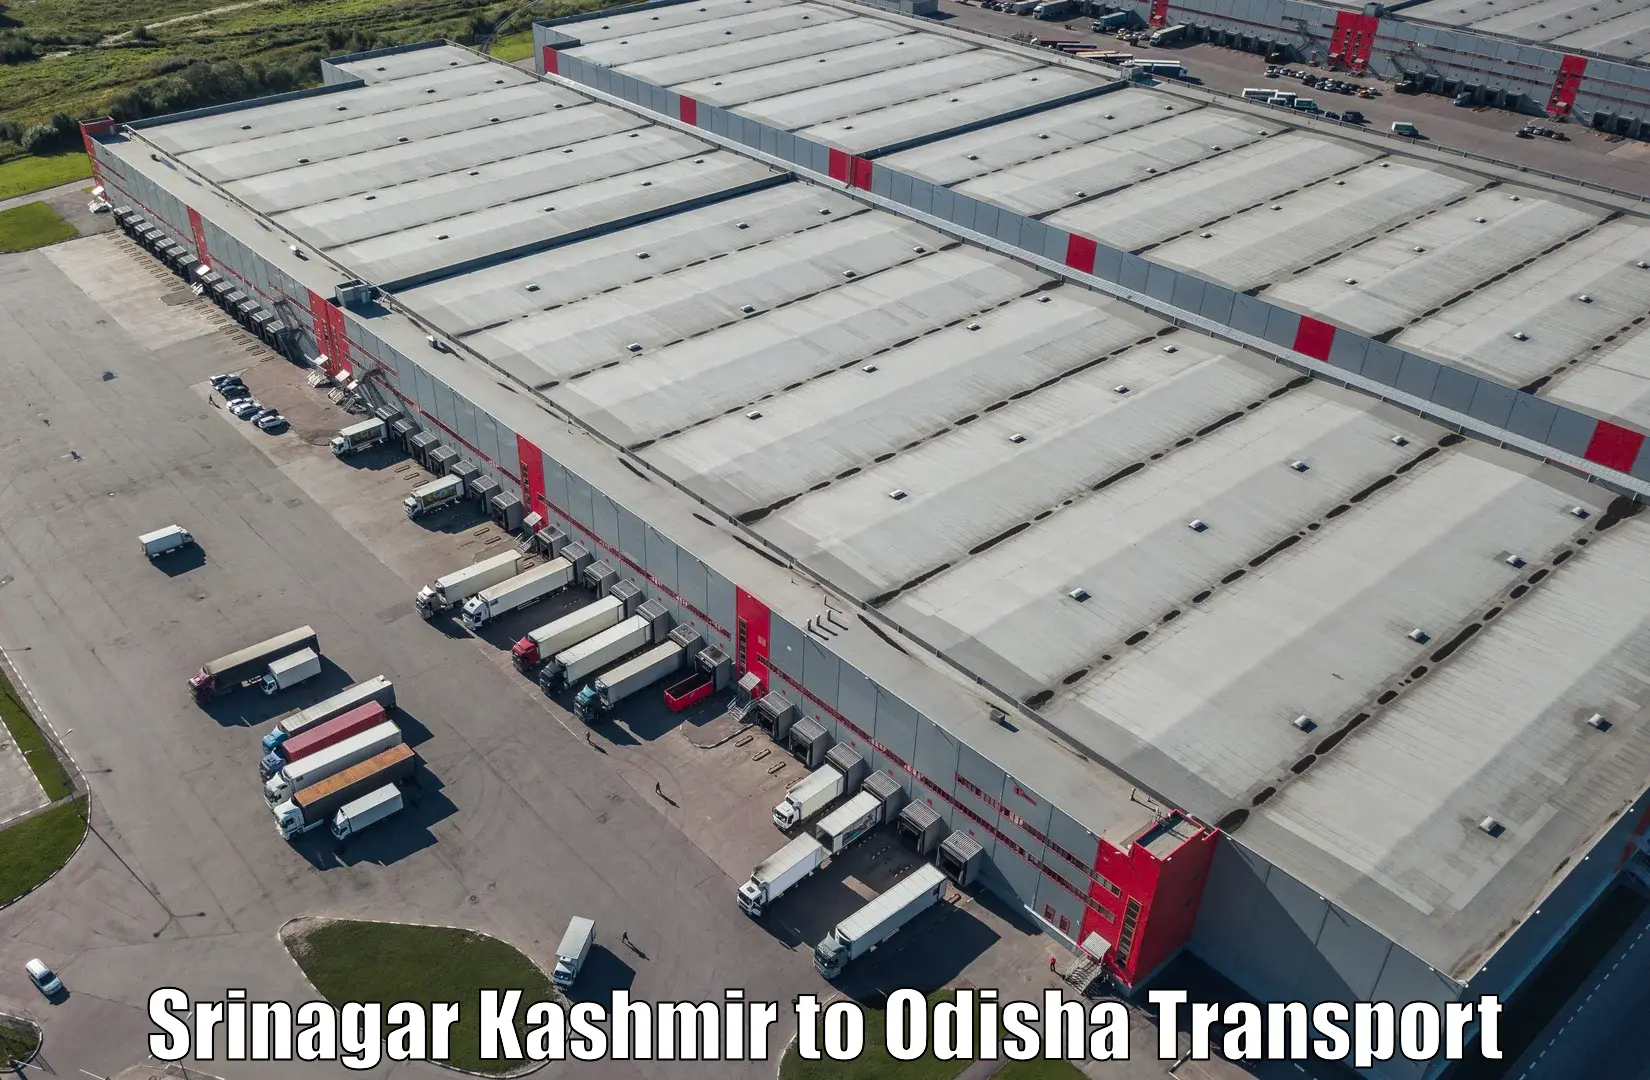 Shipping partner Srinagar Kashmir to Sohela